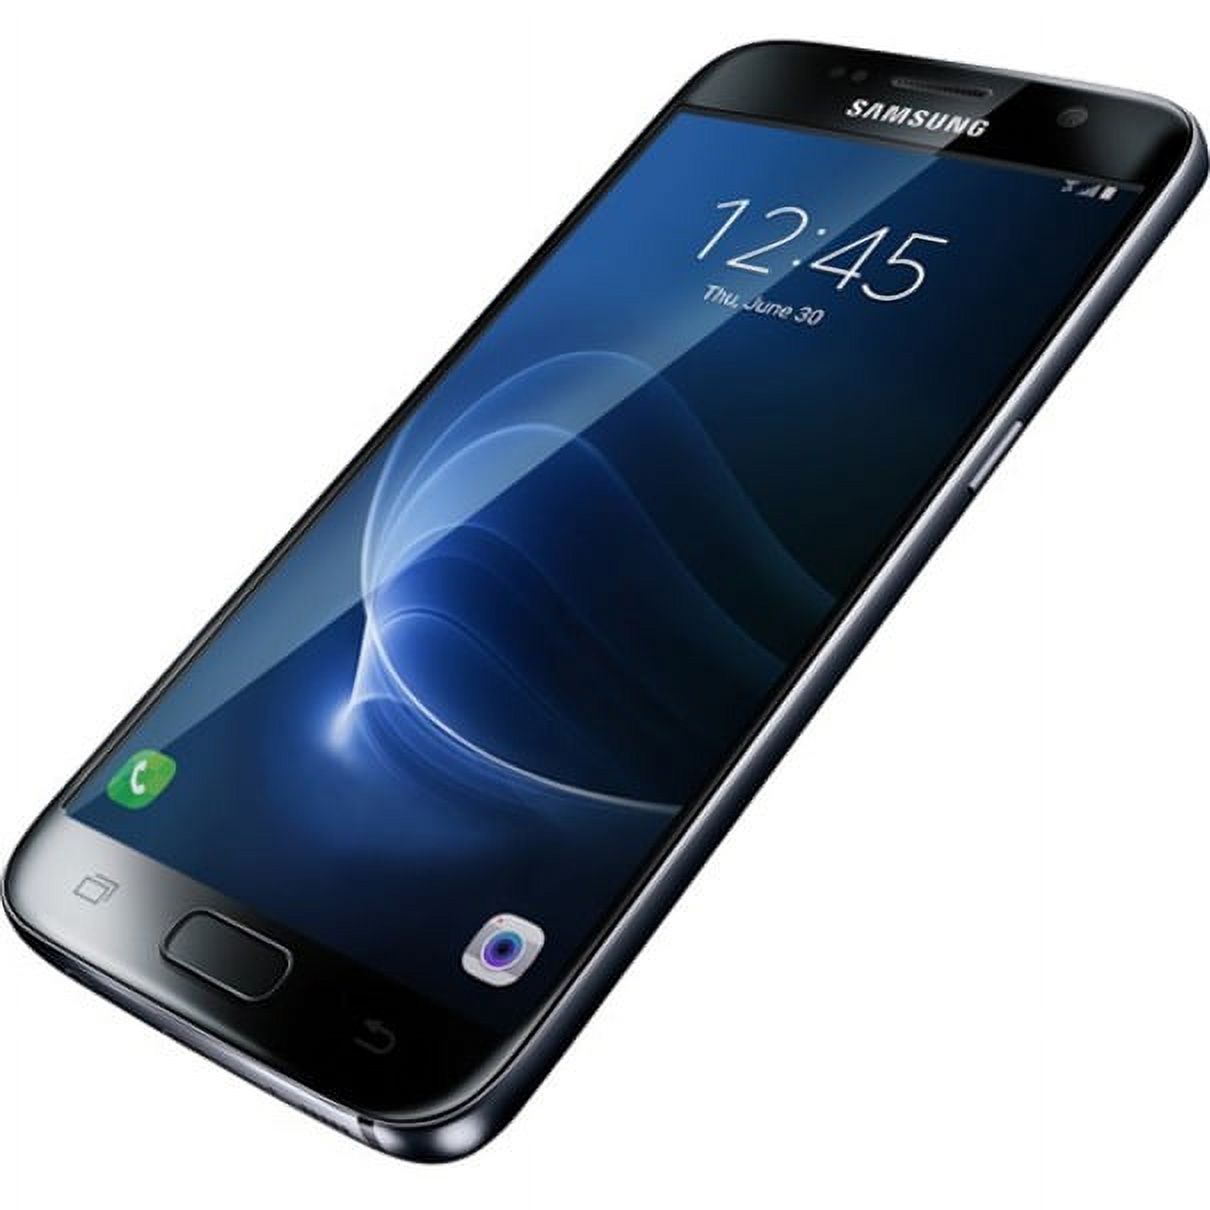 Samsung Galaxy S7 Unlocked 32GB GSM and CDMA Smartphone, Black Onyx - image 3 of 4